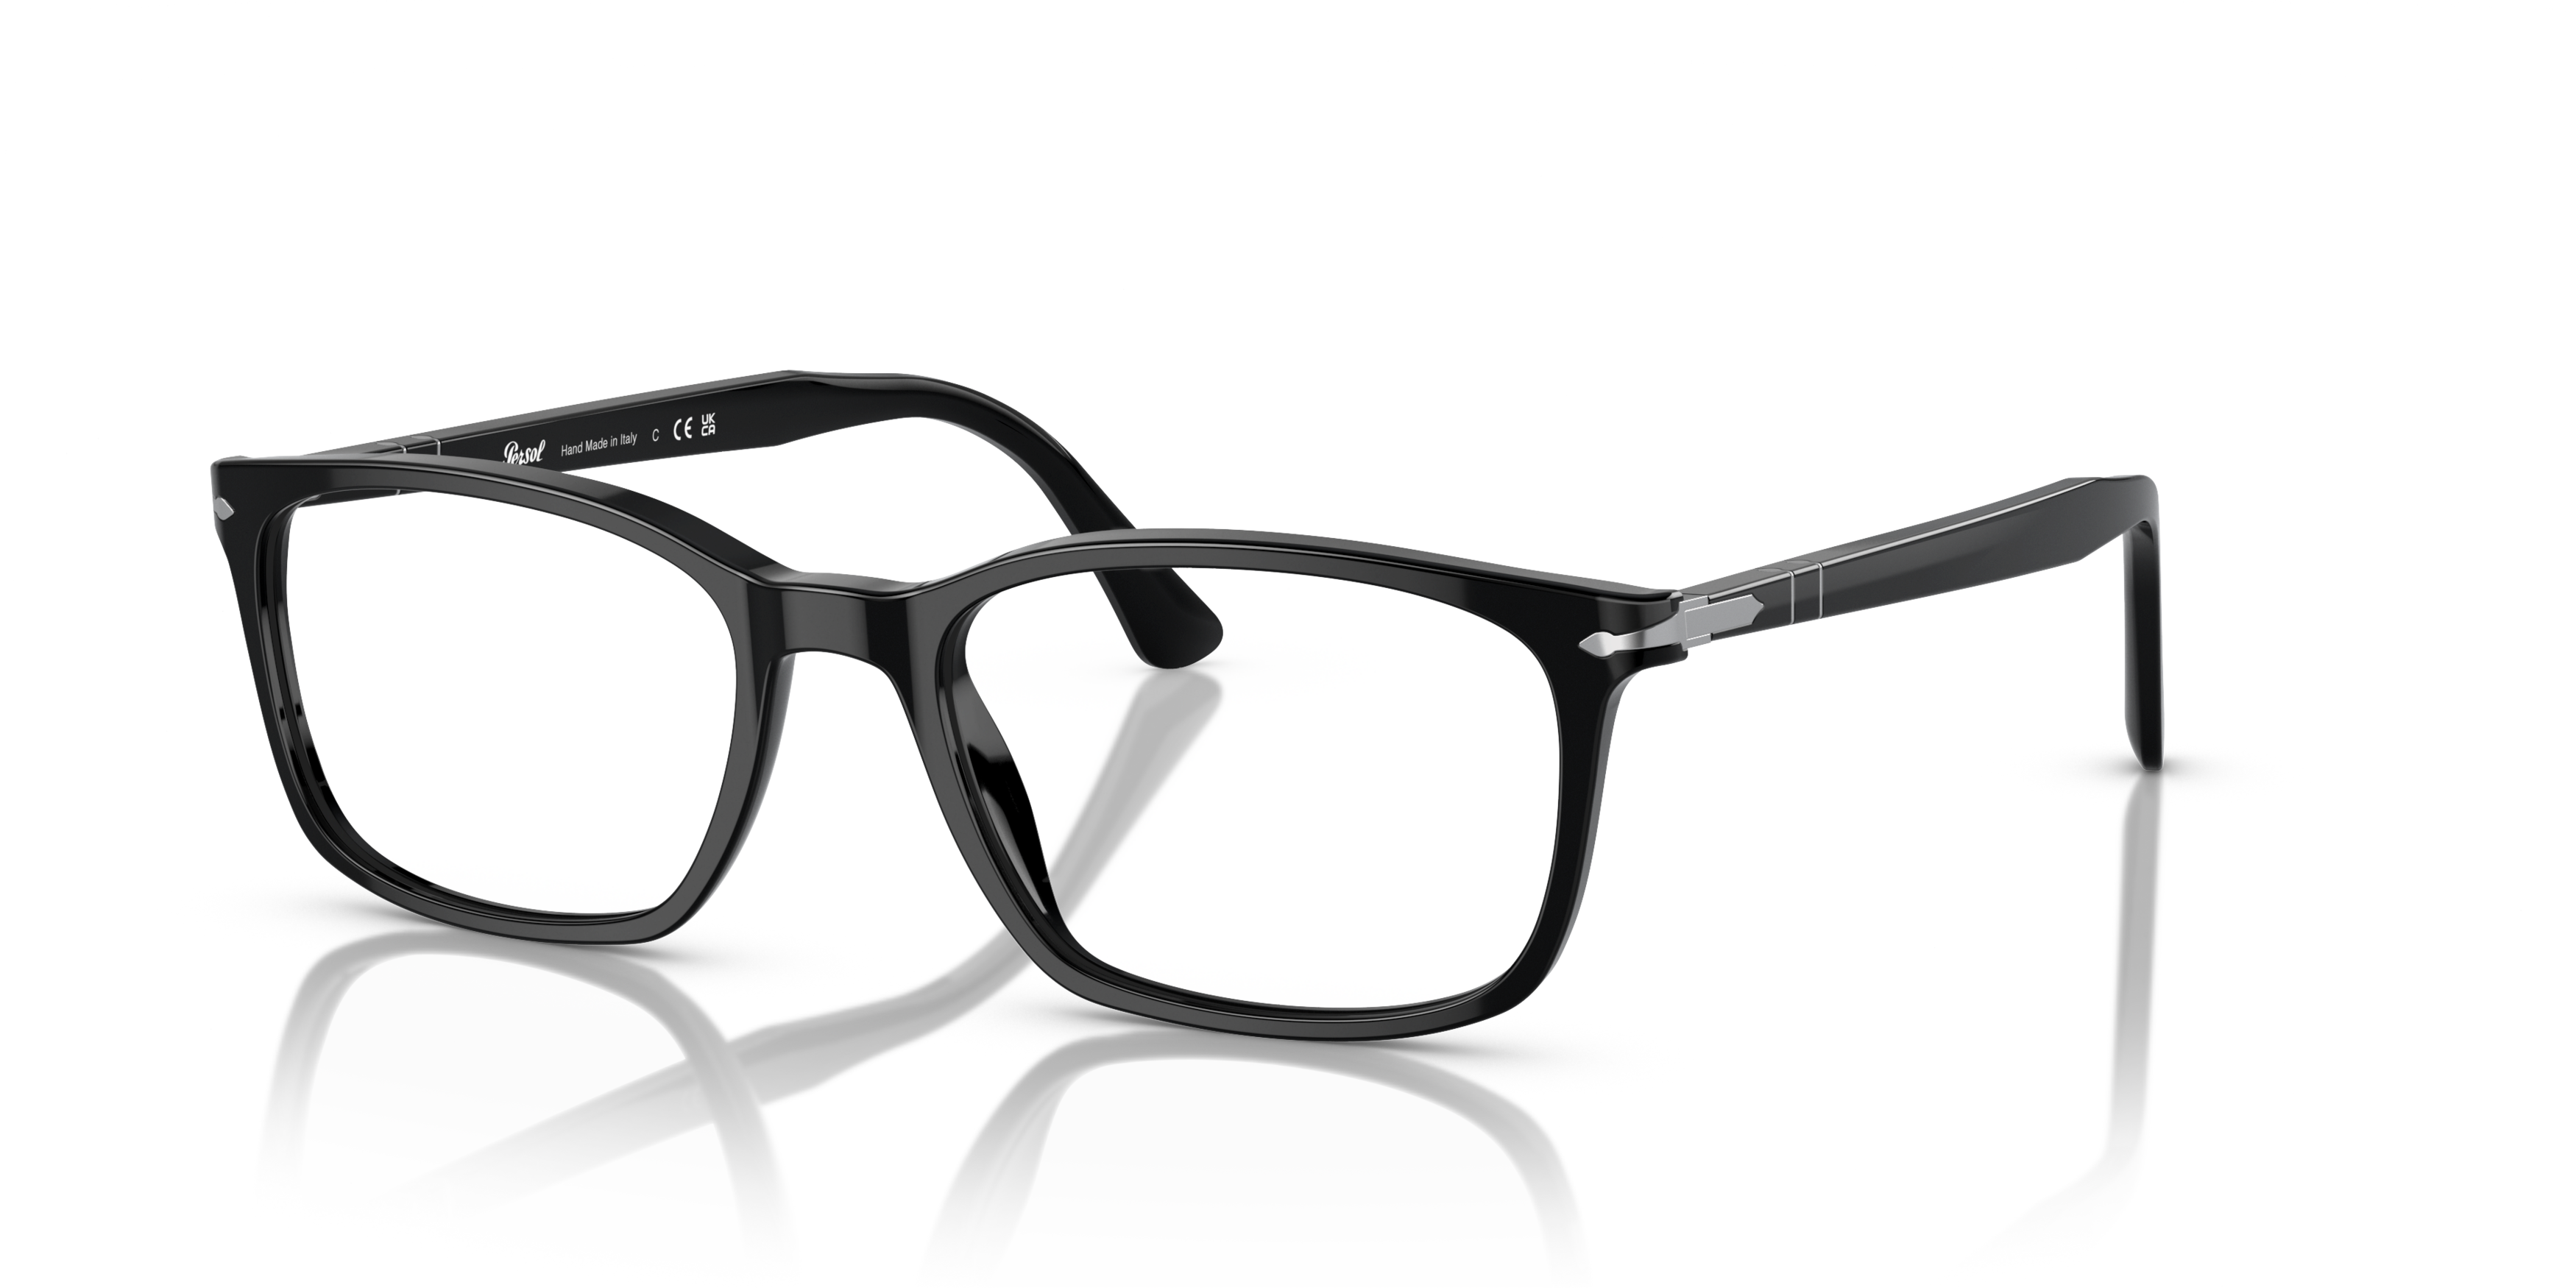 Angle_Left01 Persol PO 3189V (1079) Glasses Transparent / Tortoise Shell